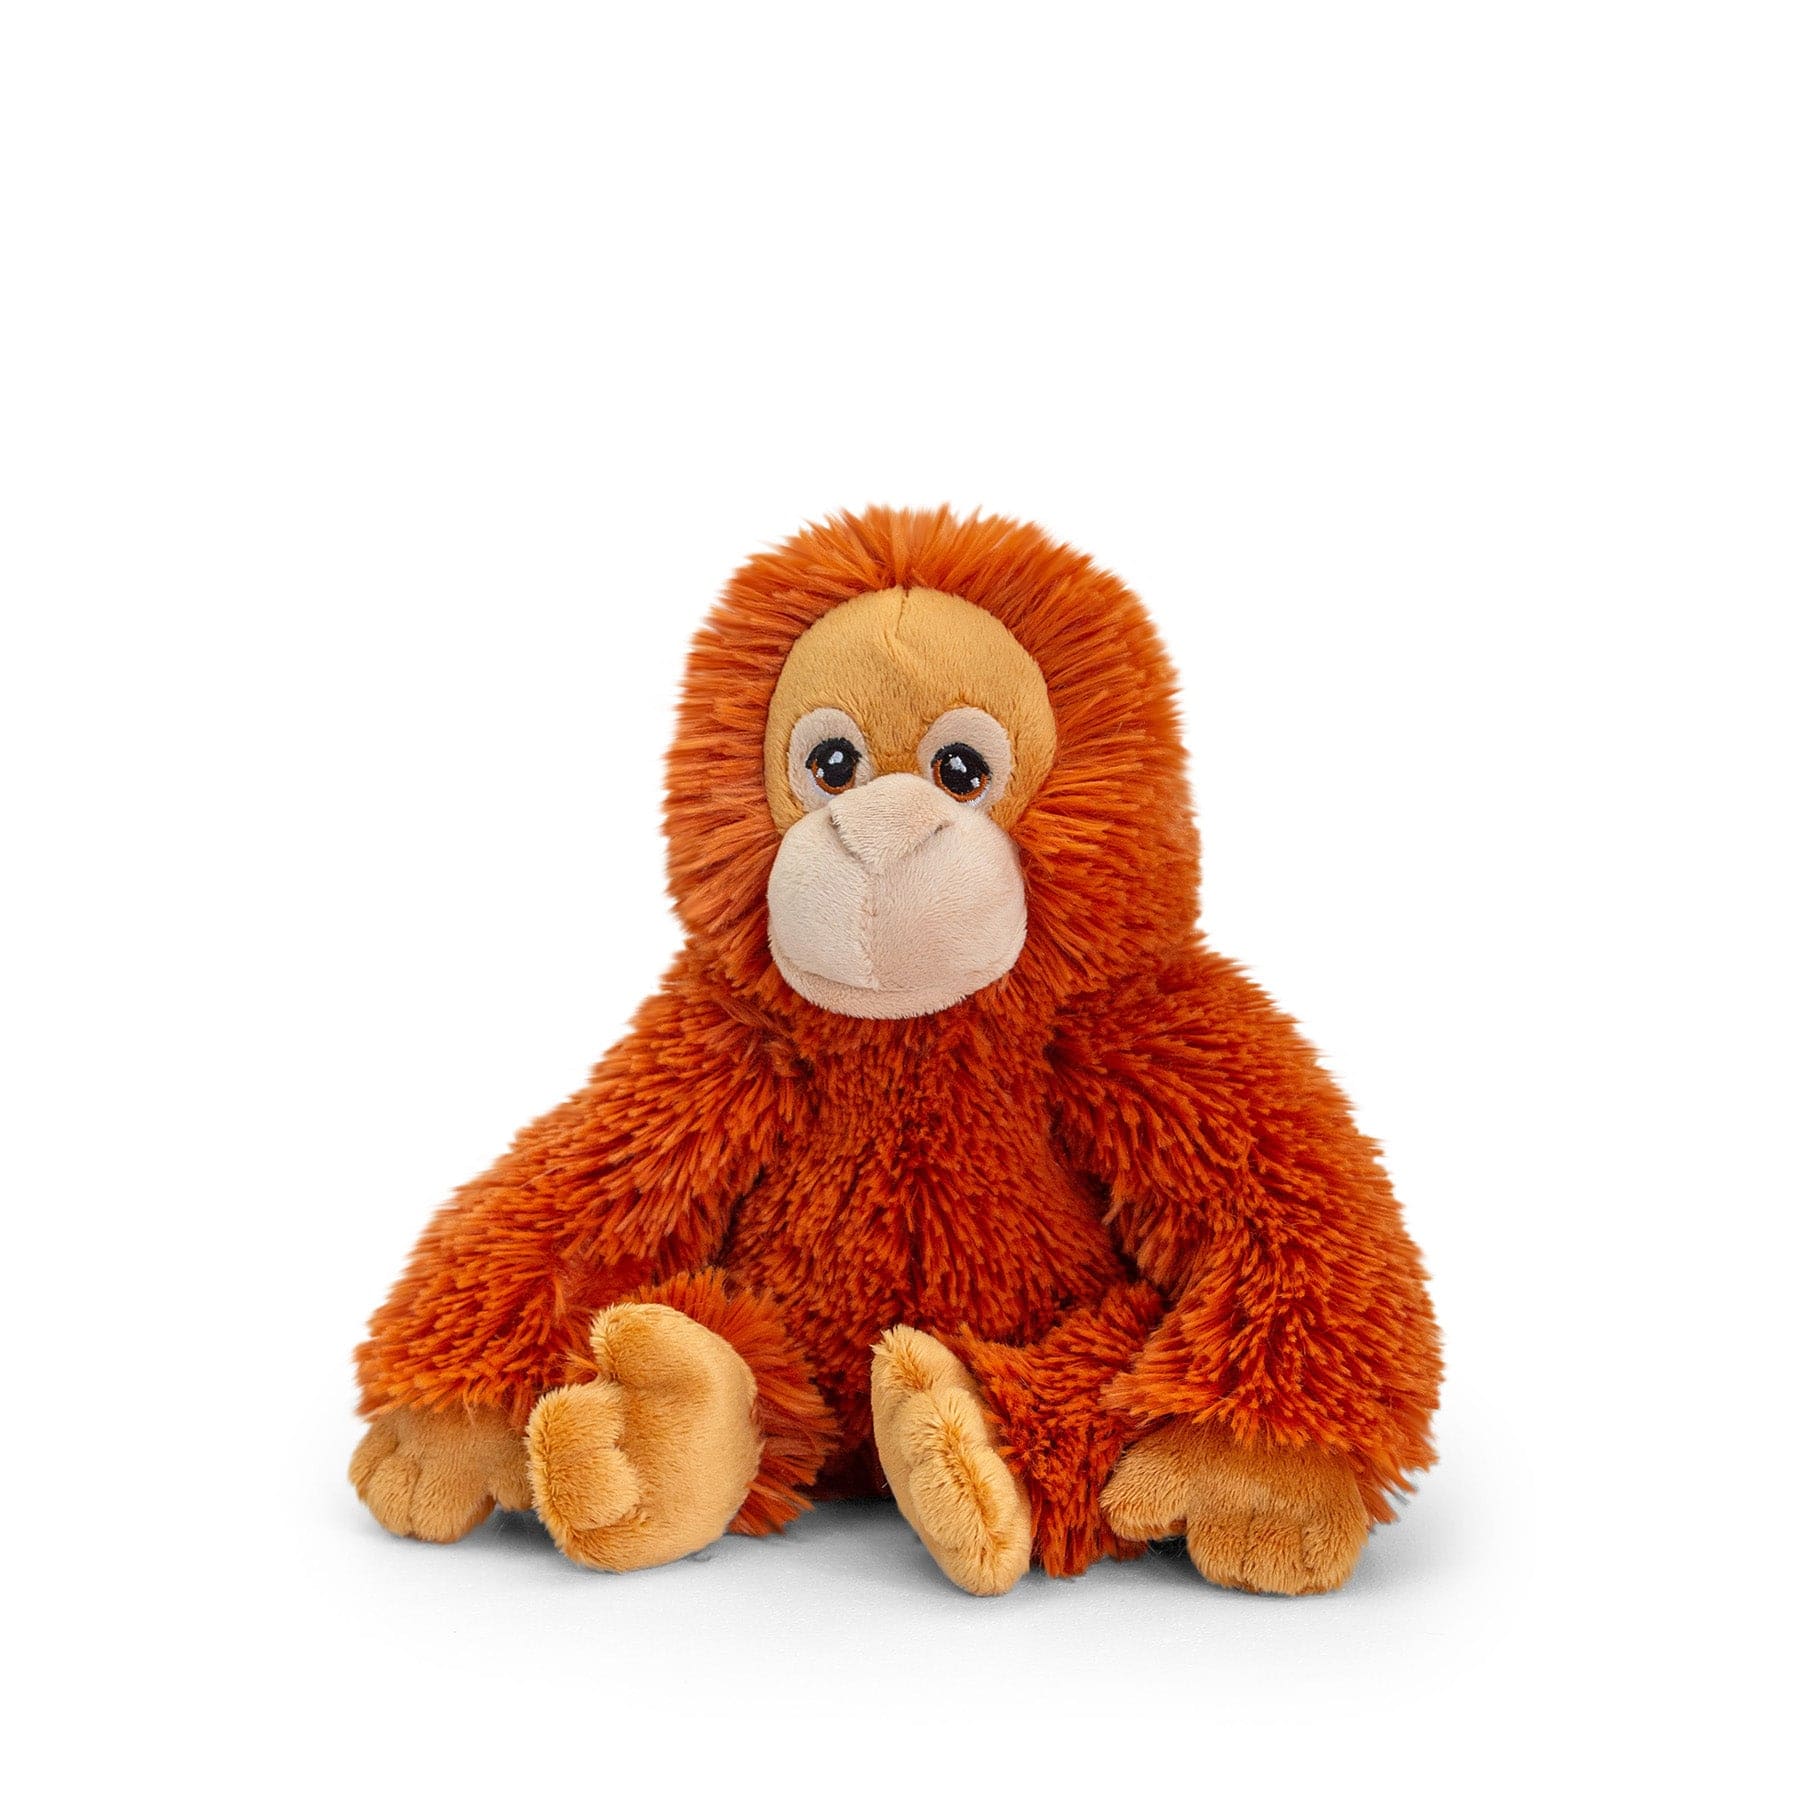 Plush orange monkey toy sitting isolated on white background with adorable expression, soft stuffed animal for children.